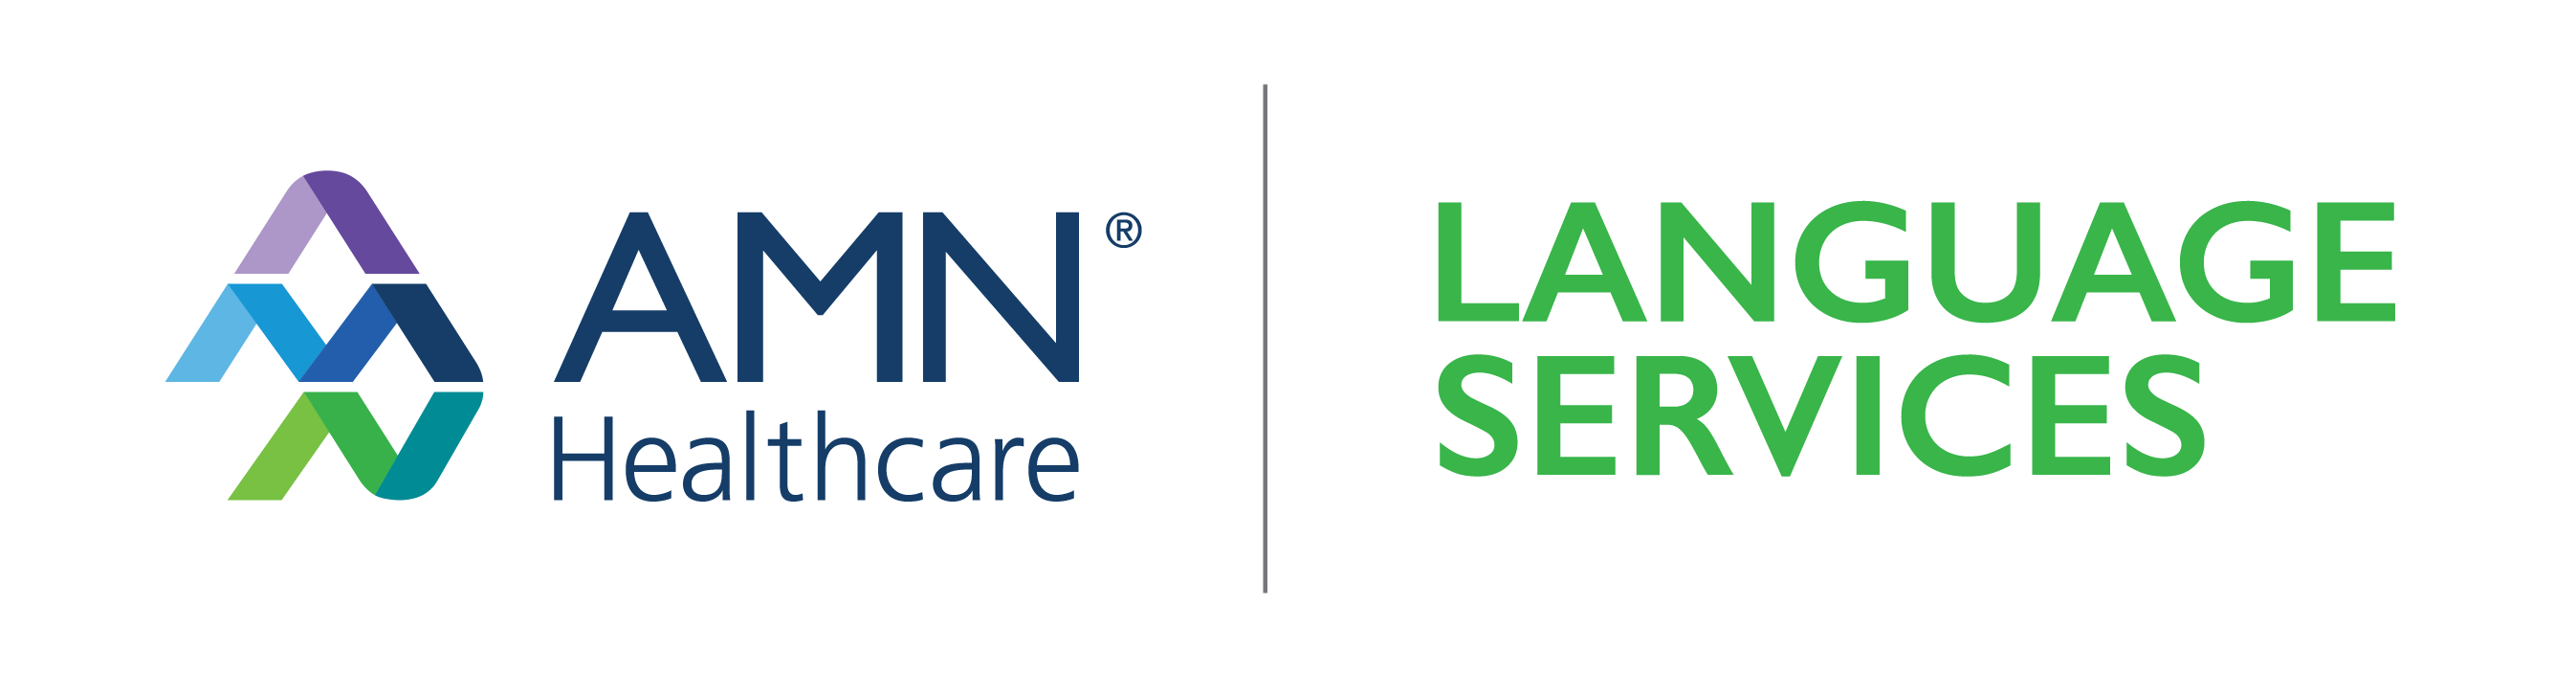 amn language services logo